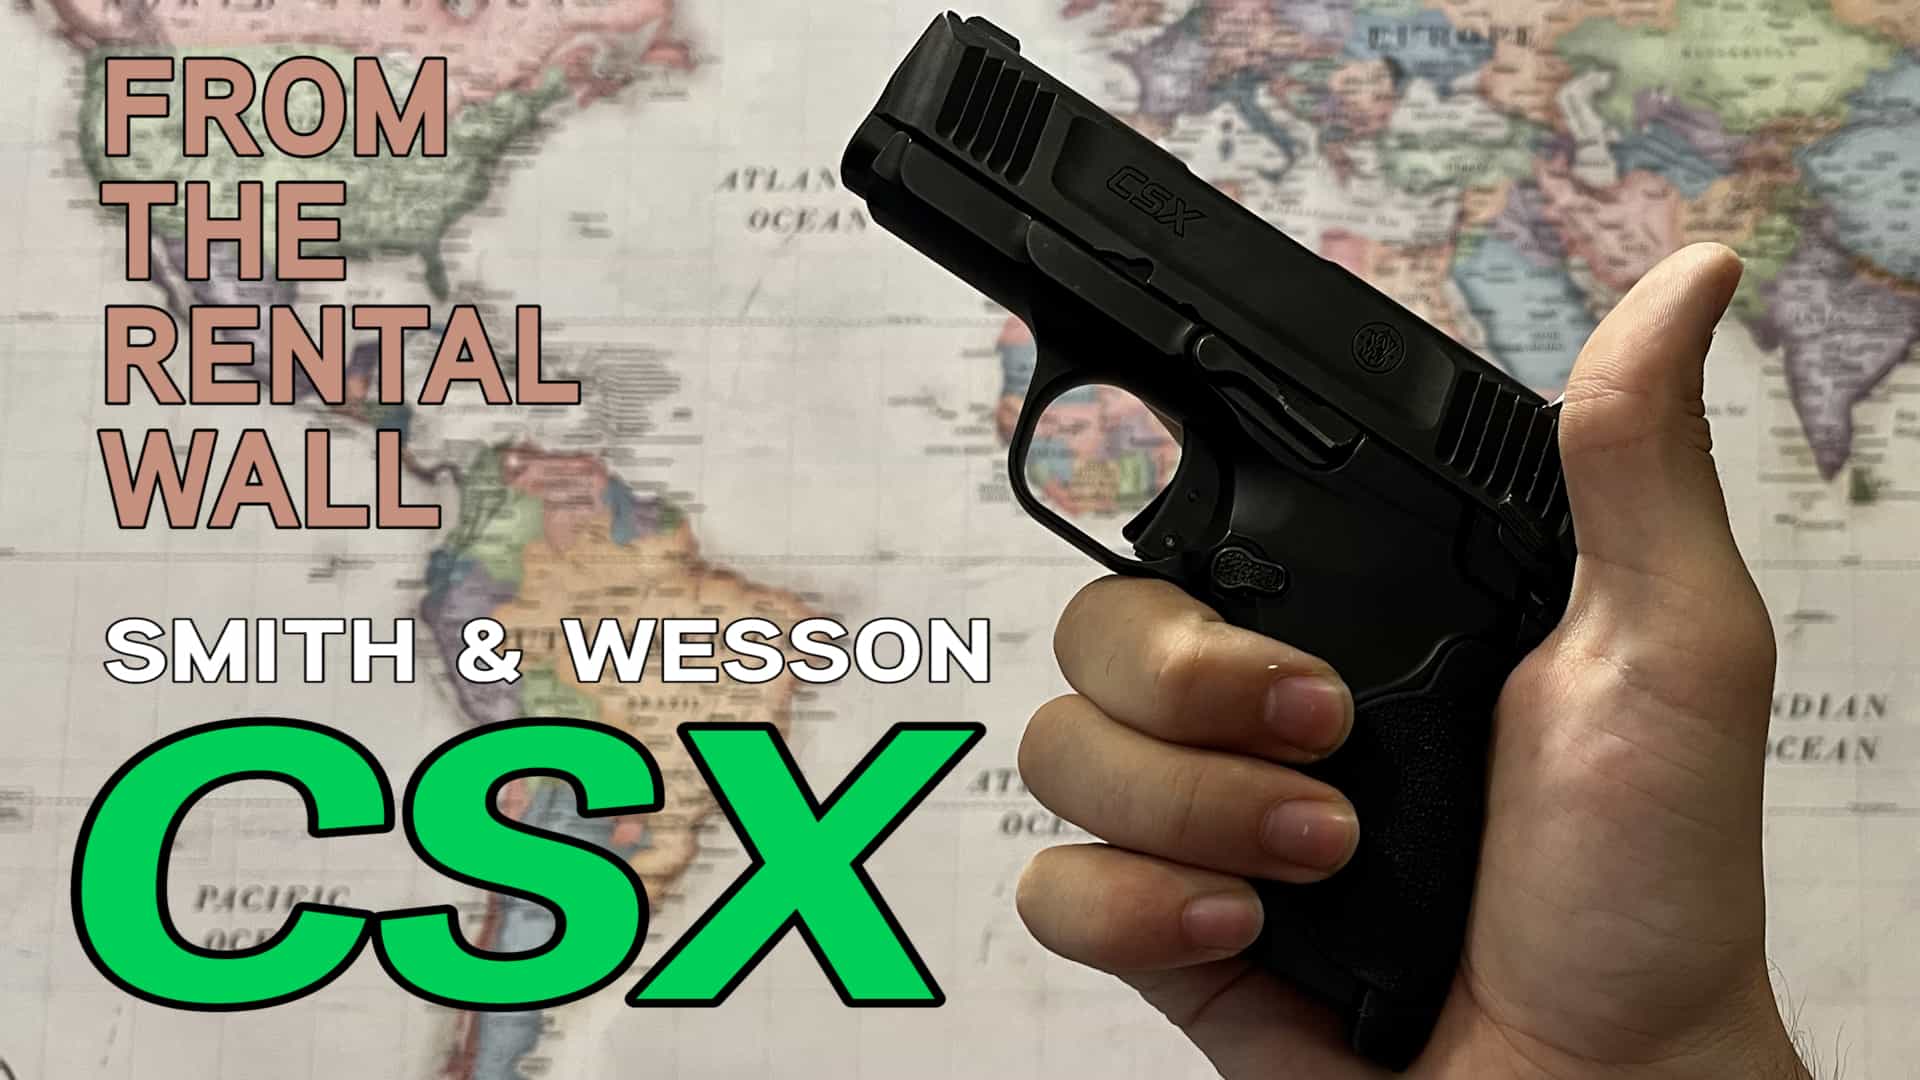 Smith & Wesson CSX